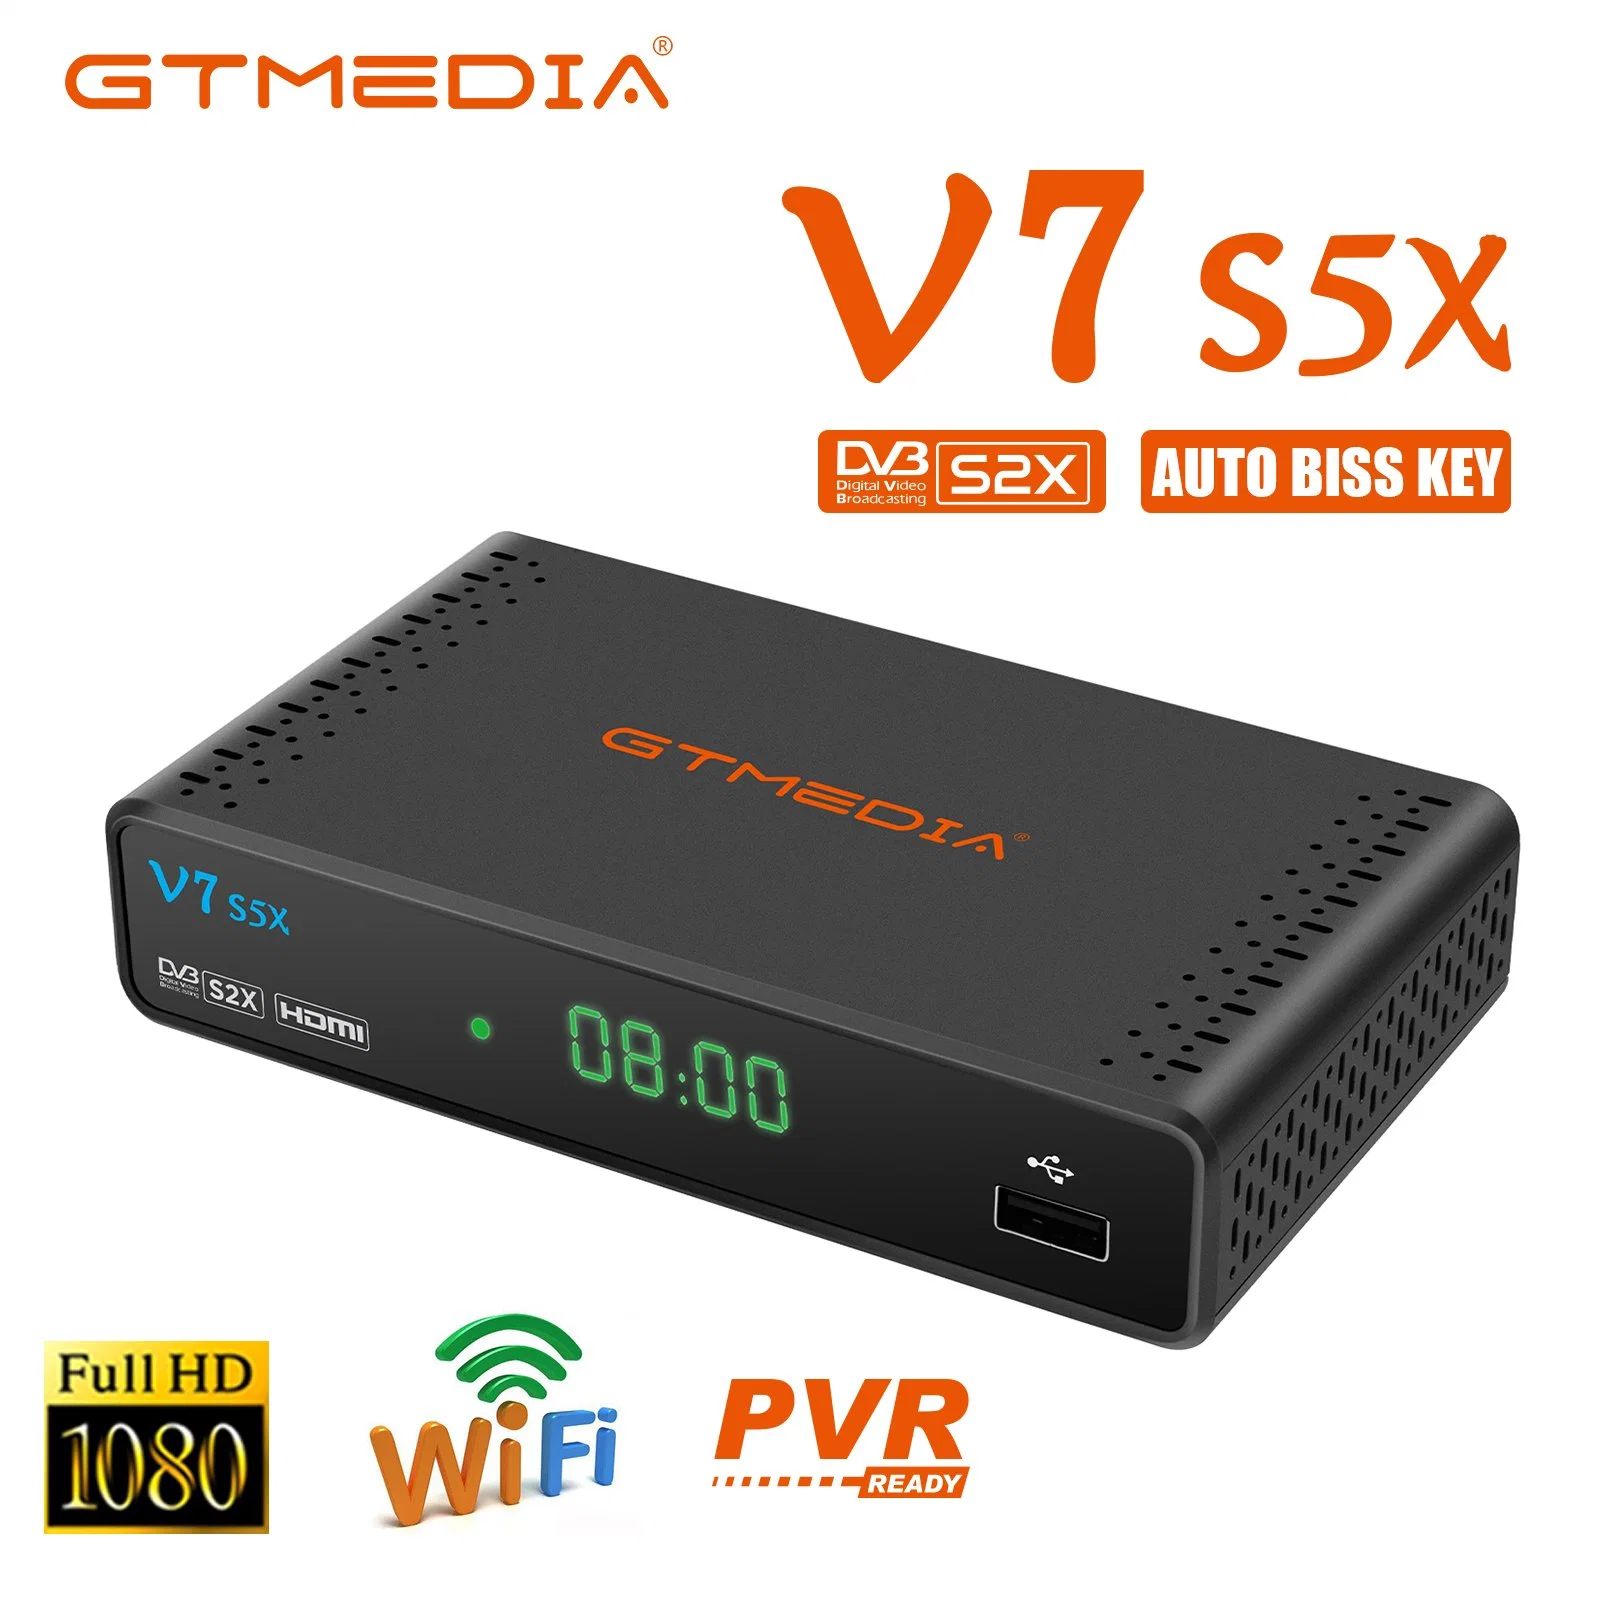 New Arrival Gtmedia V7 S5X DVB-S2X Digital Satellite TV Receiver Support Cccam, Newcam